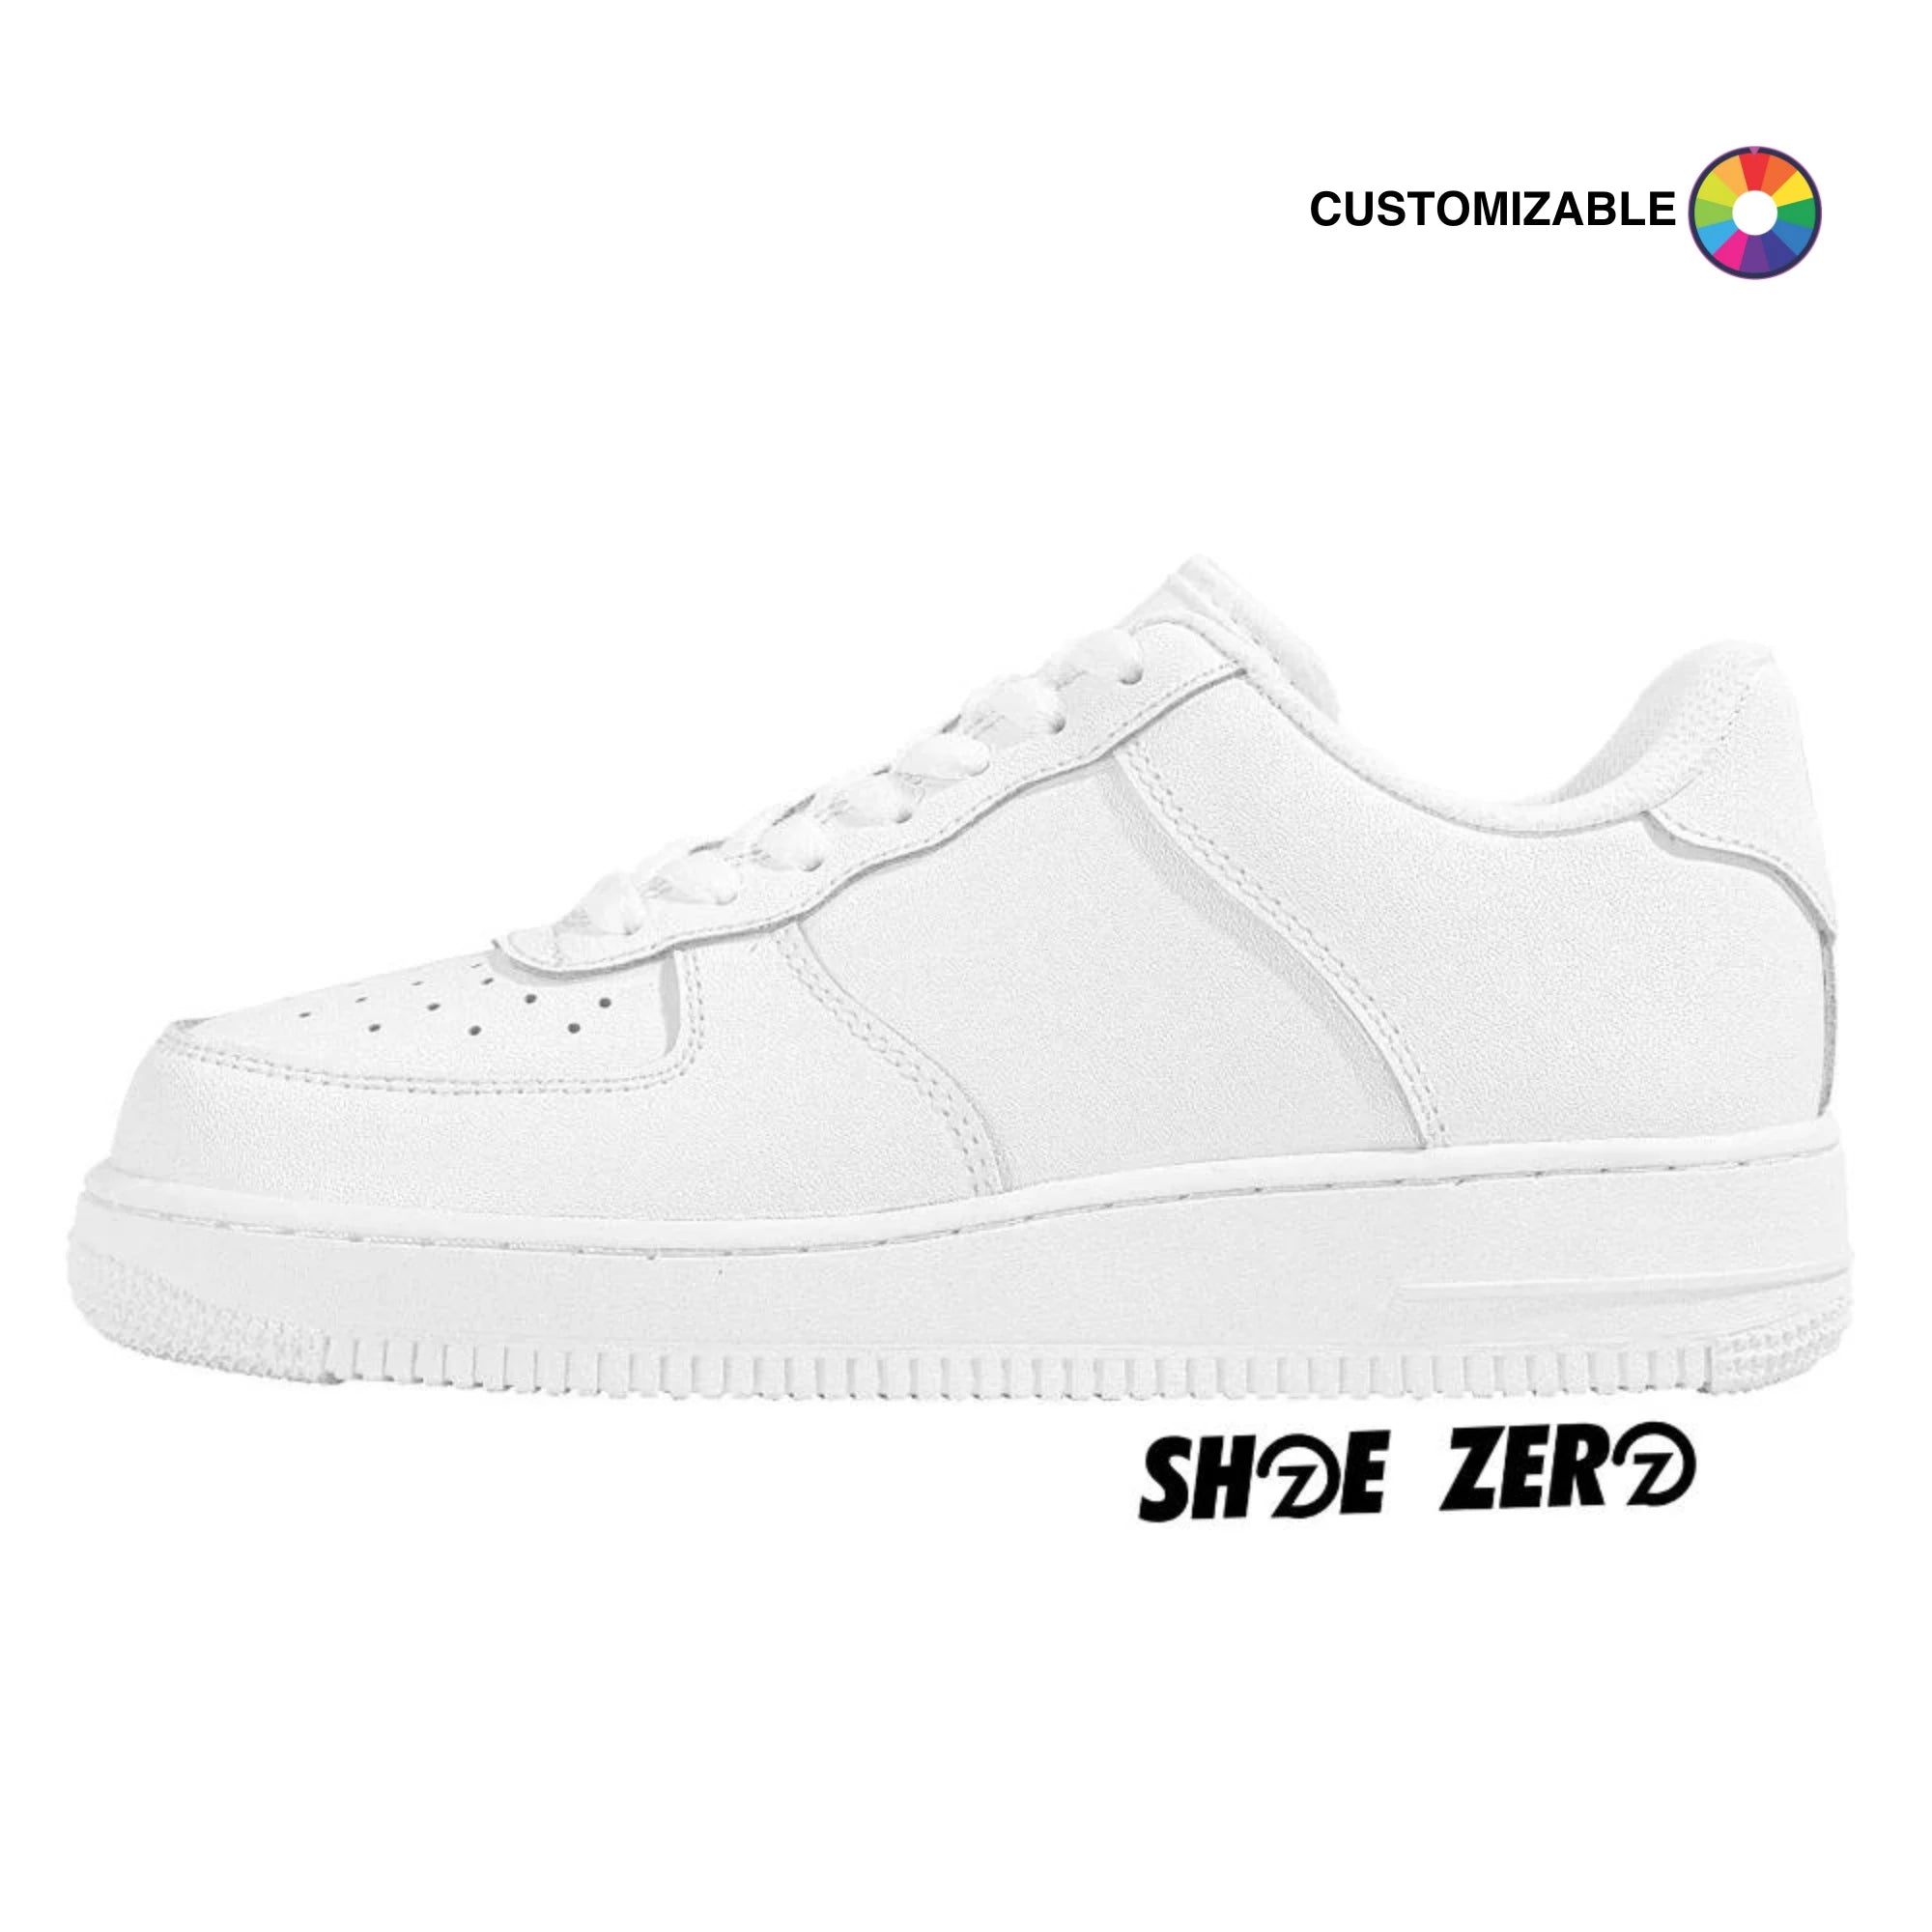 Customizable Air-Force Zeros | Design your own Low Top | Shoe Zero